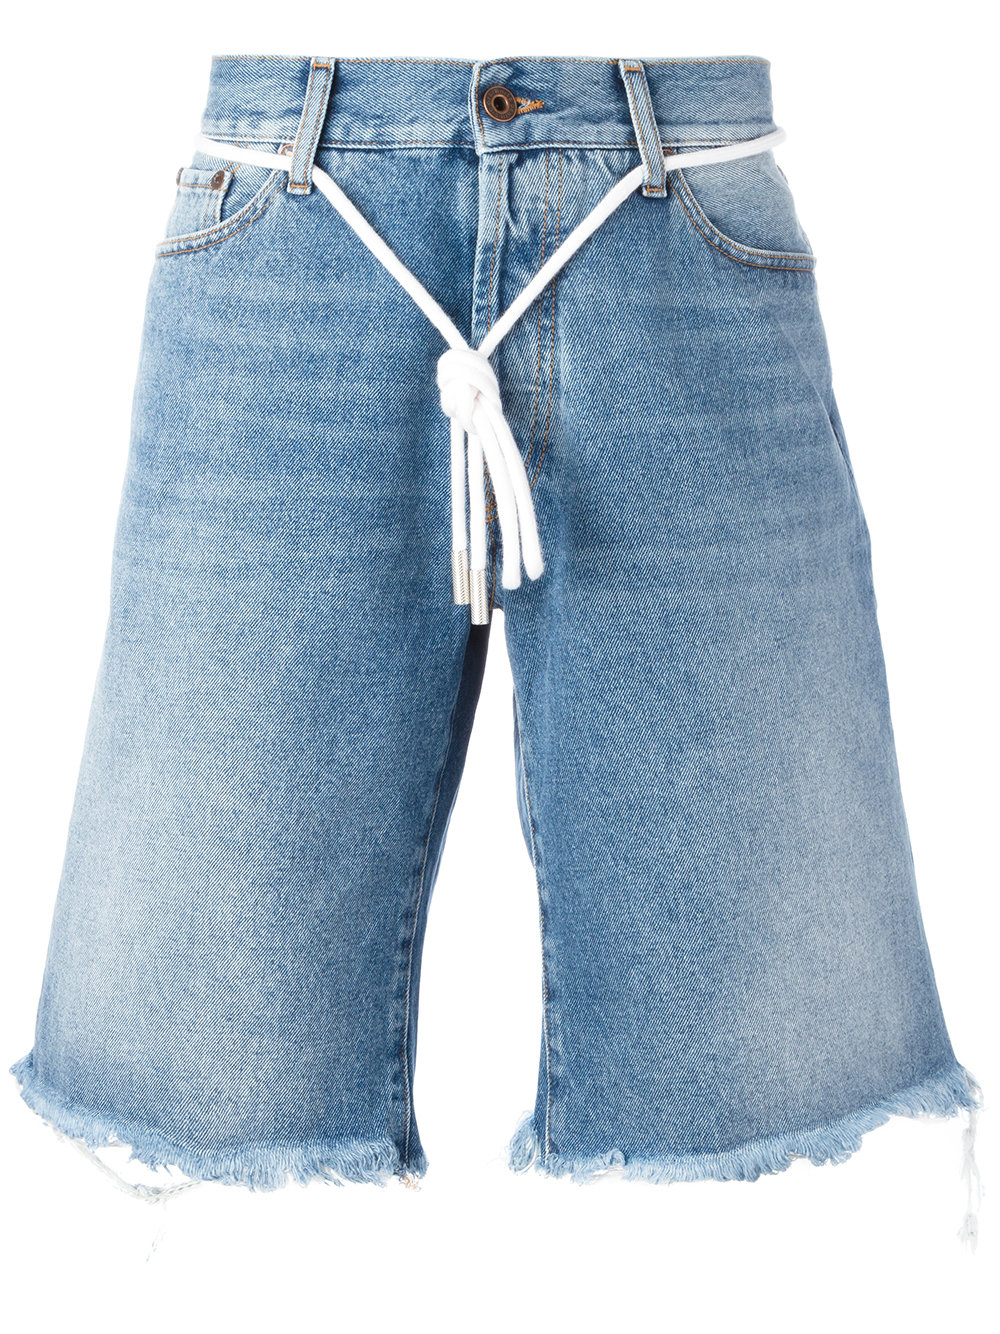 Off-White frayed denim shorts 7301-VINTAGE WASH Men Clothing